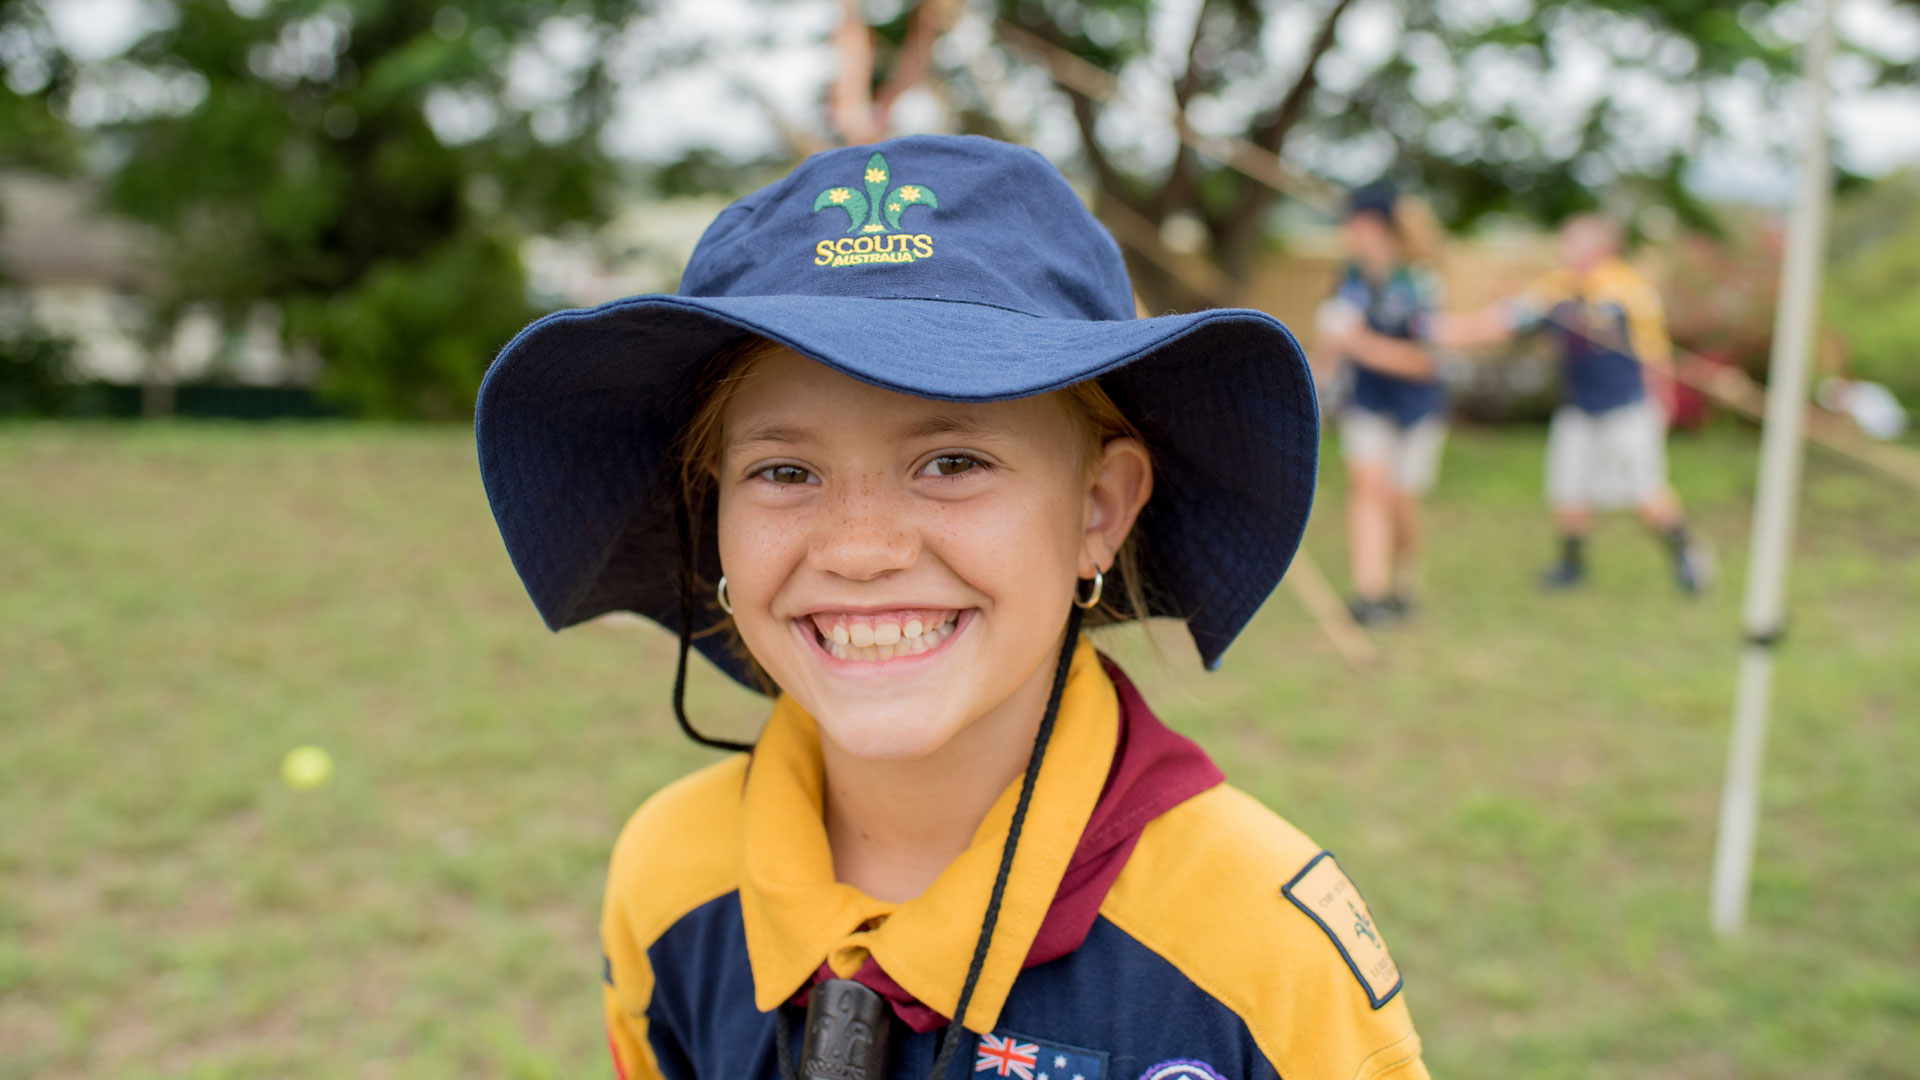 scouts australia smiling girl in hat